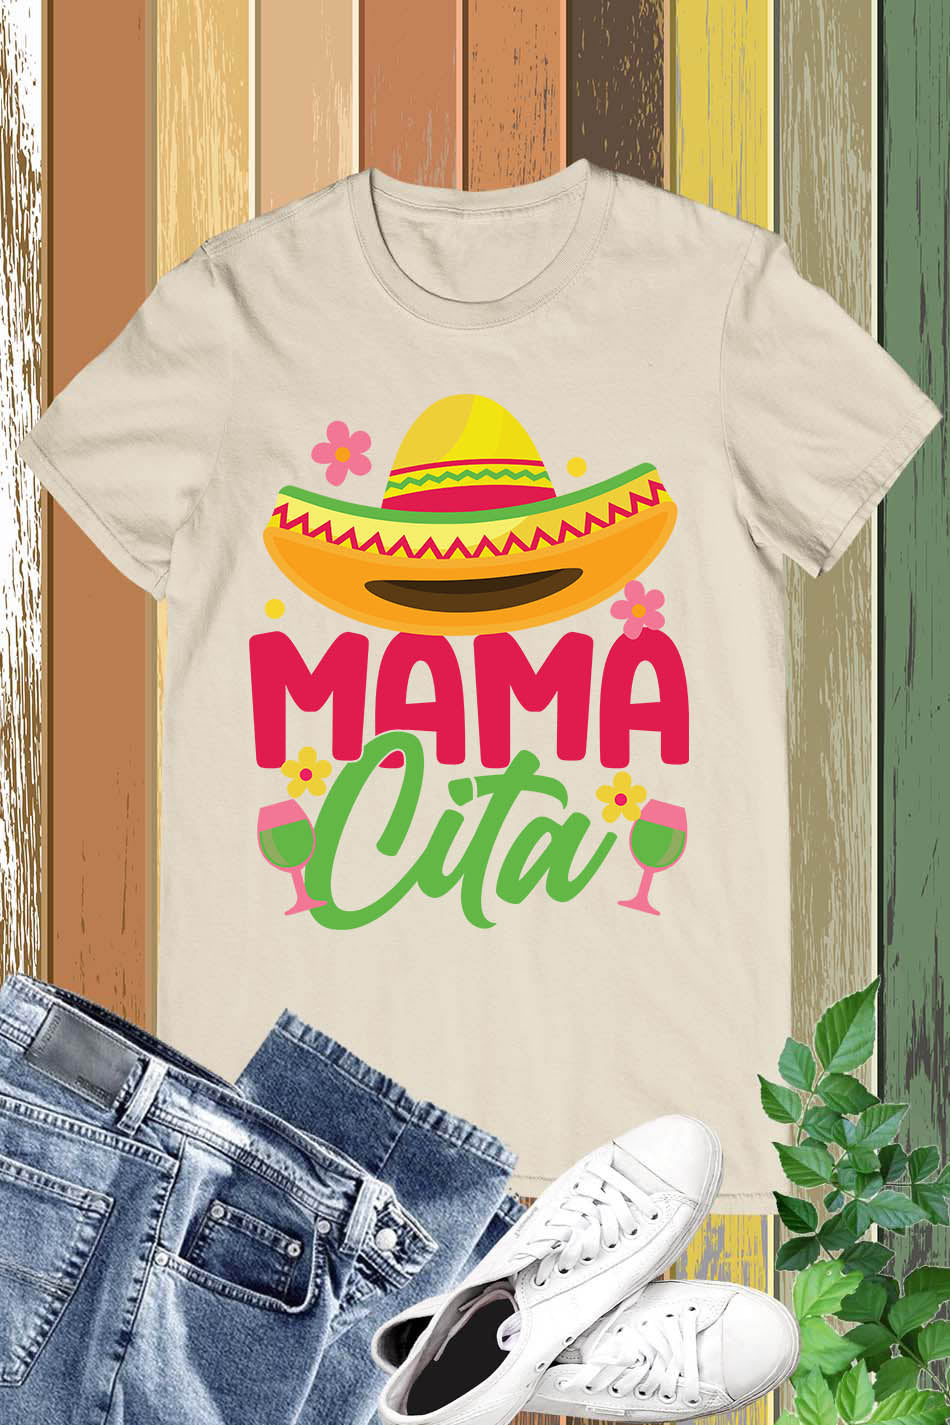 Mama Cita Cinco De Mayo T-shirt